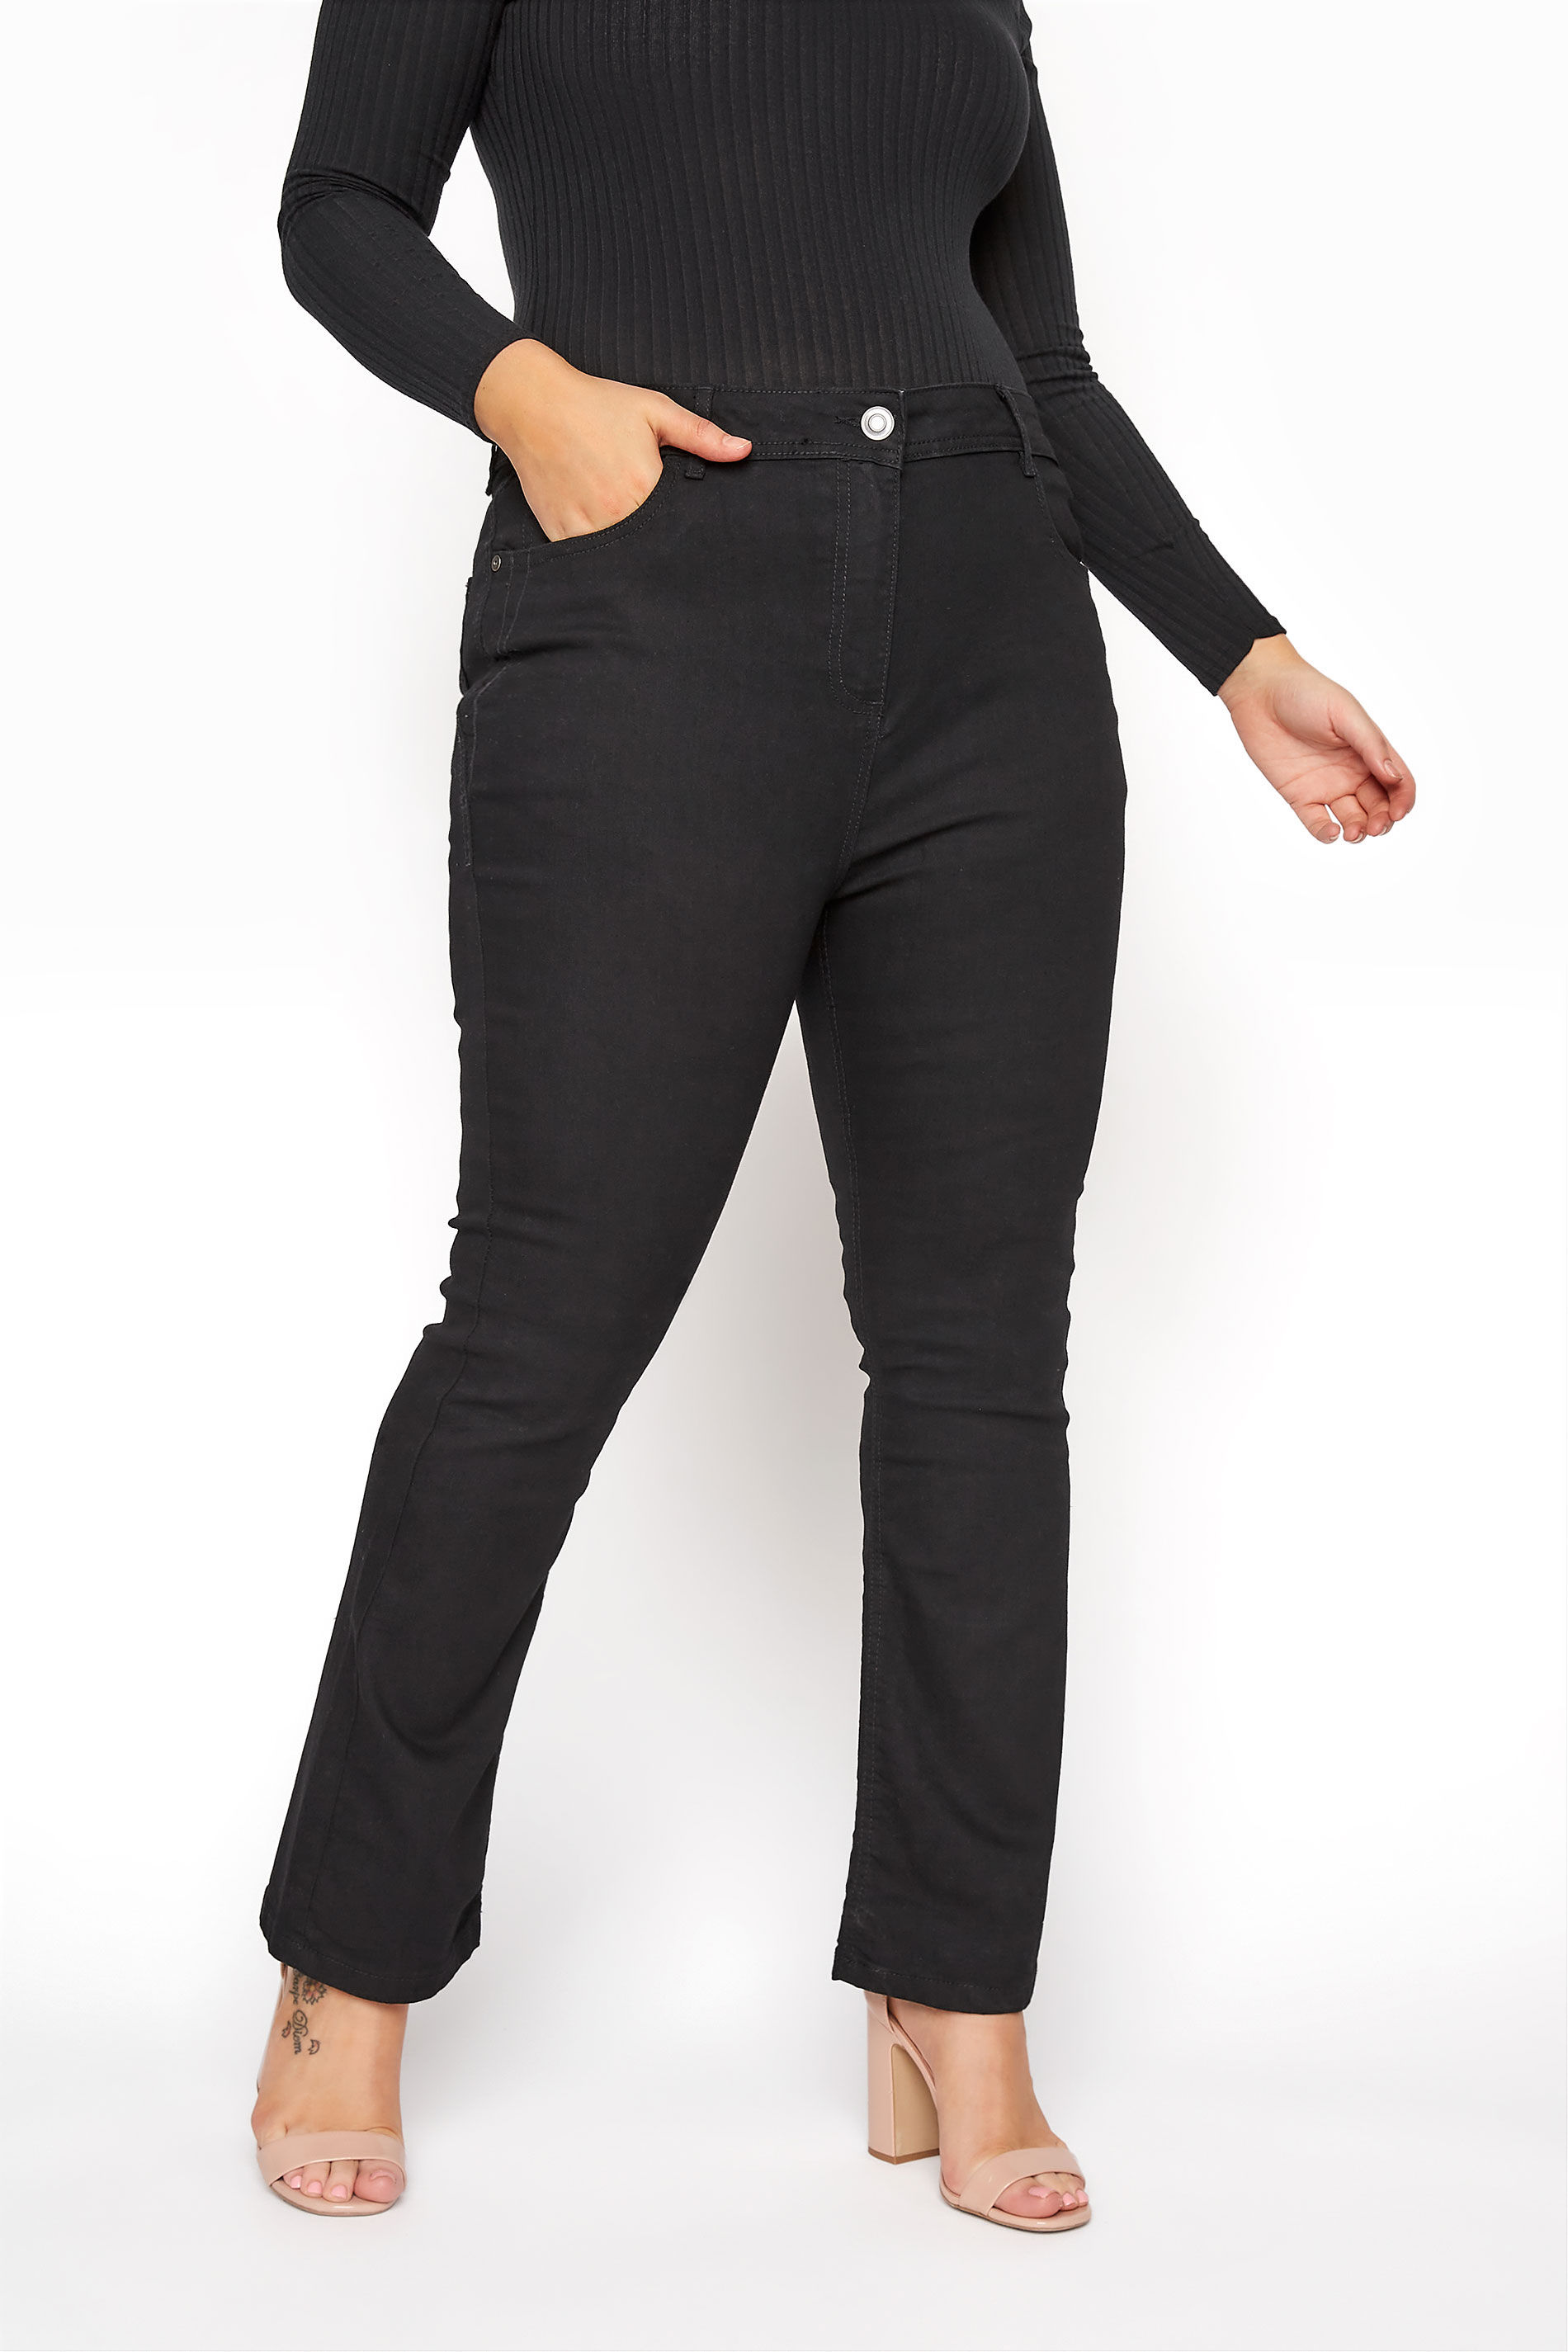 Black Bootcut 5 Pocket Jeans Plus Size 16 to 32 1